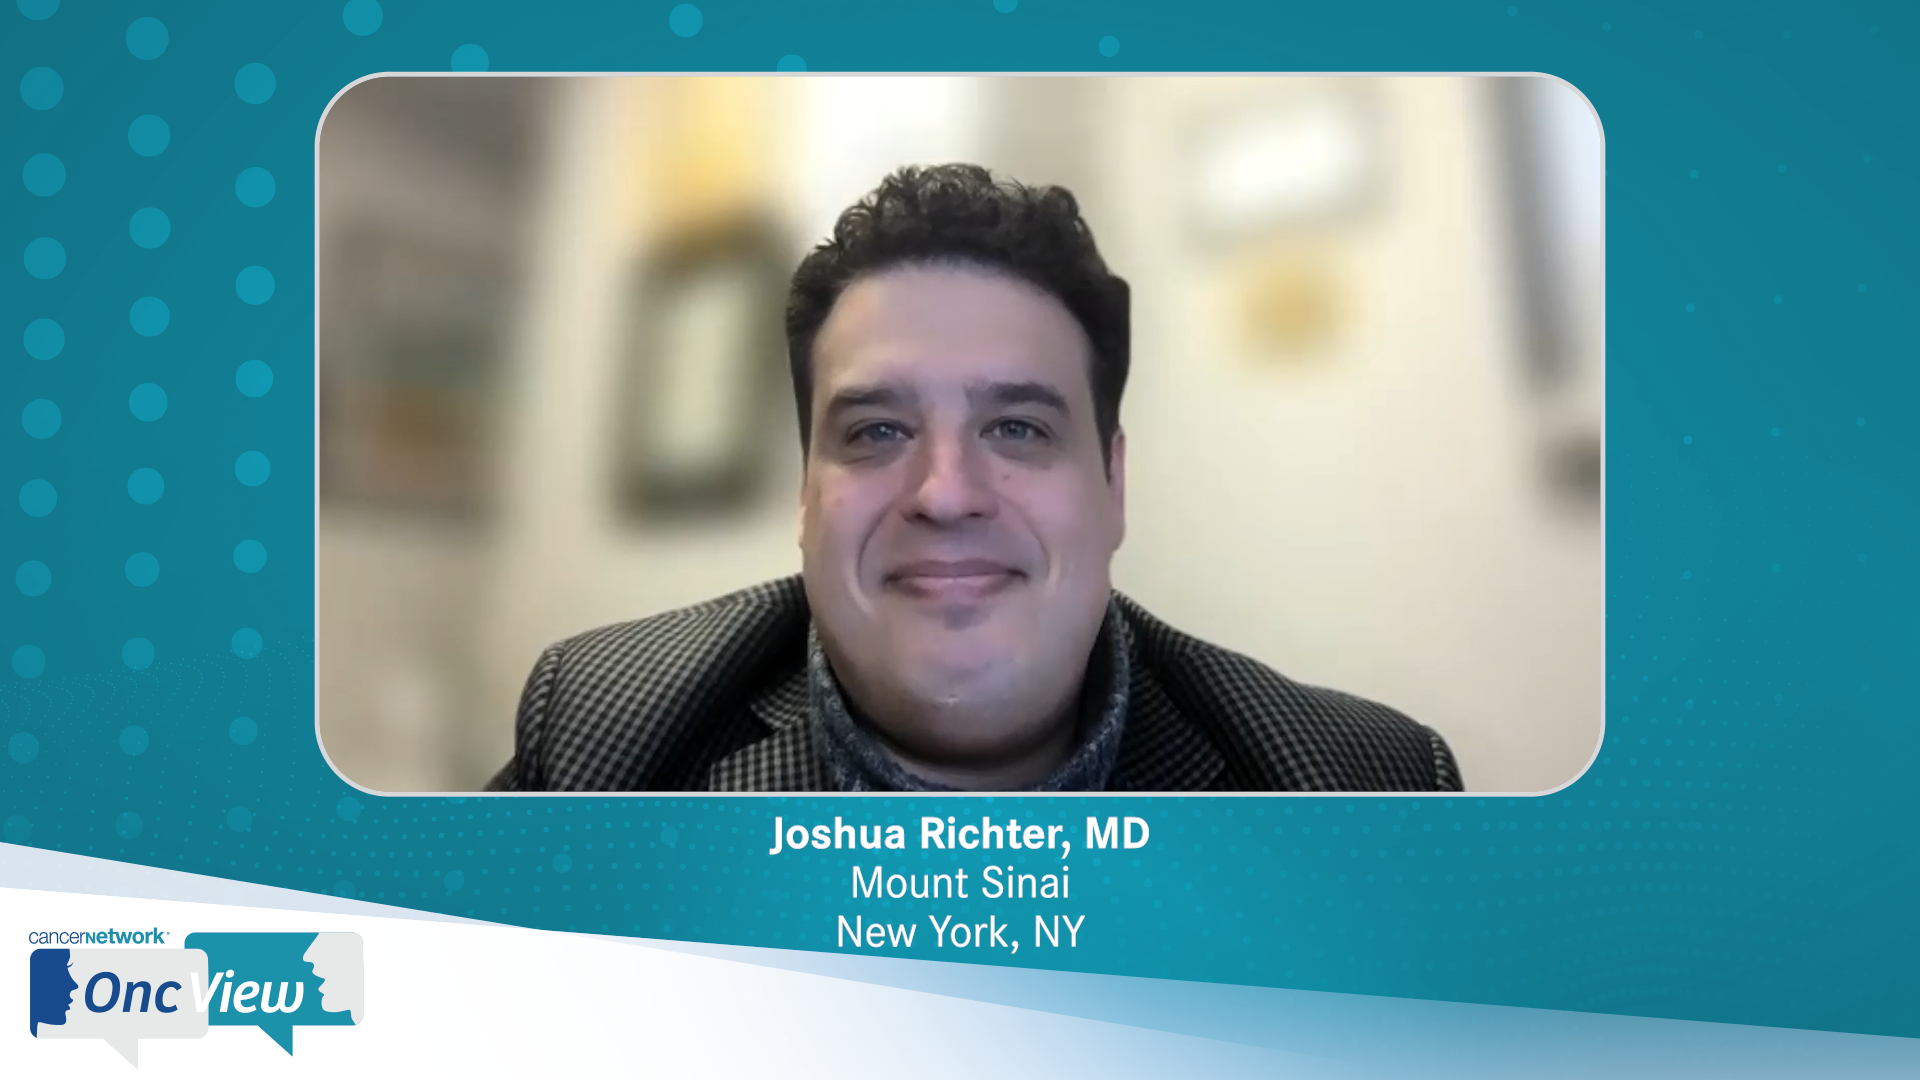 Joshua Richter, MD, an expert on multiple myeloma